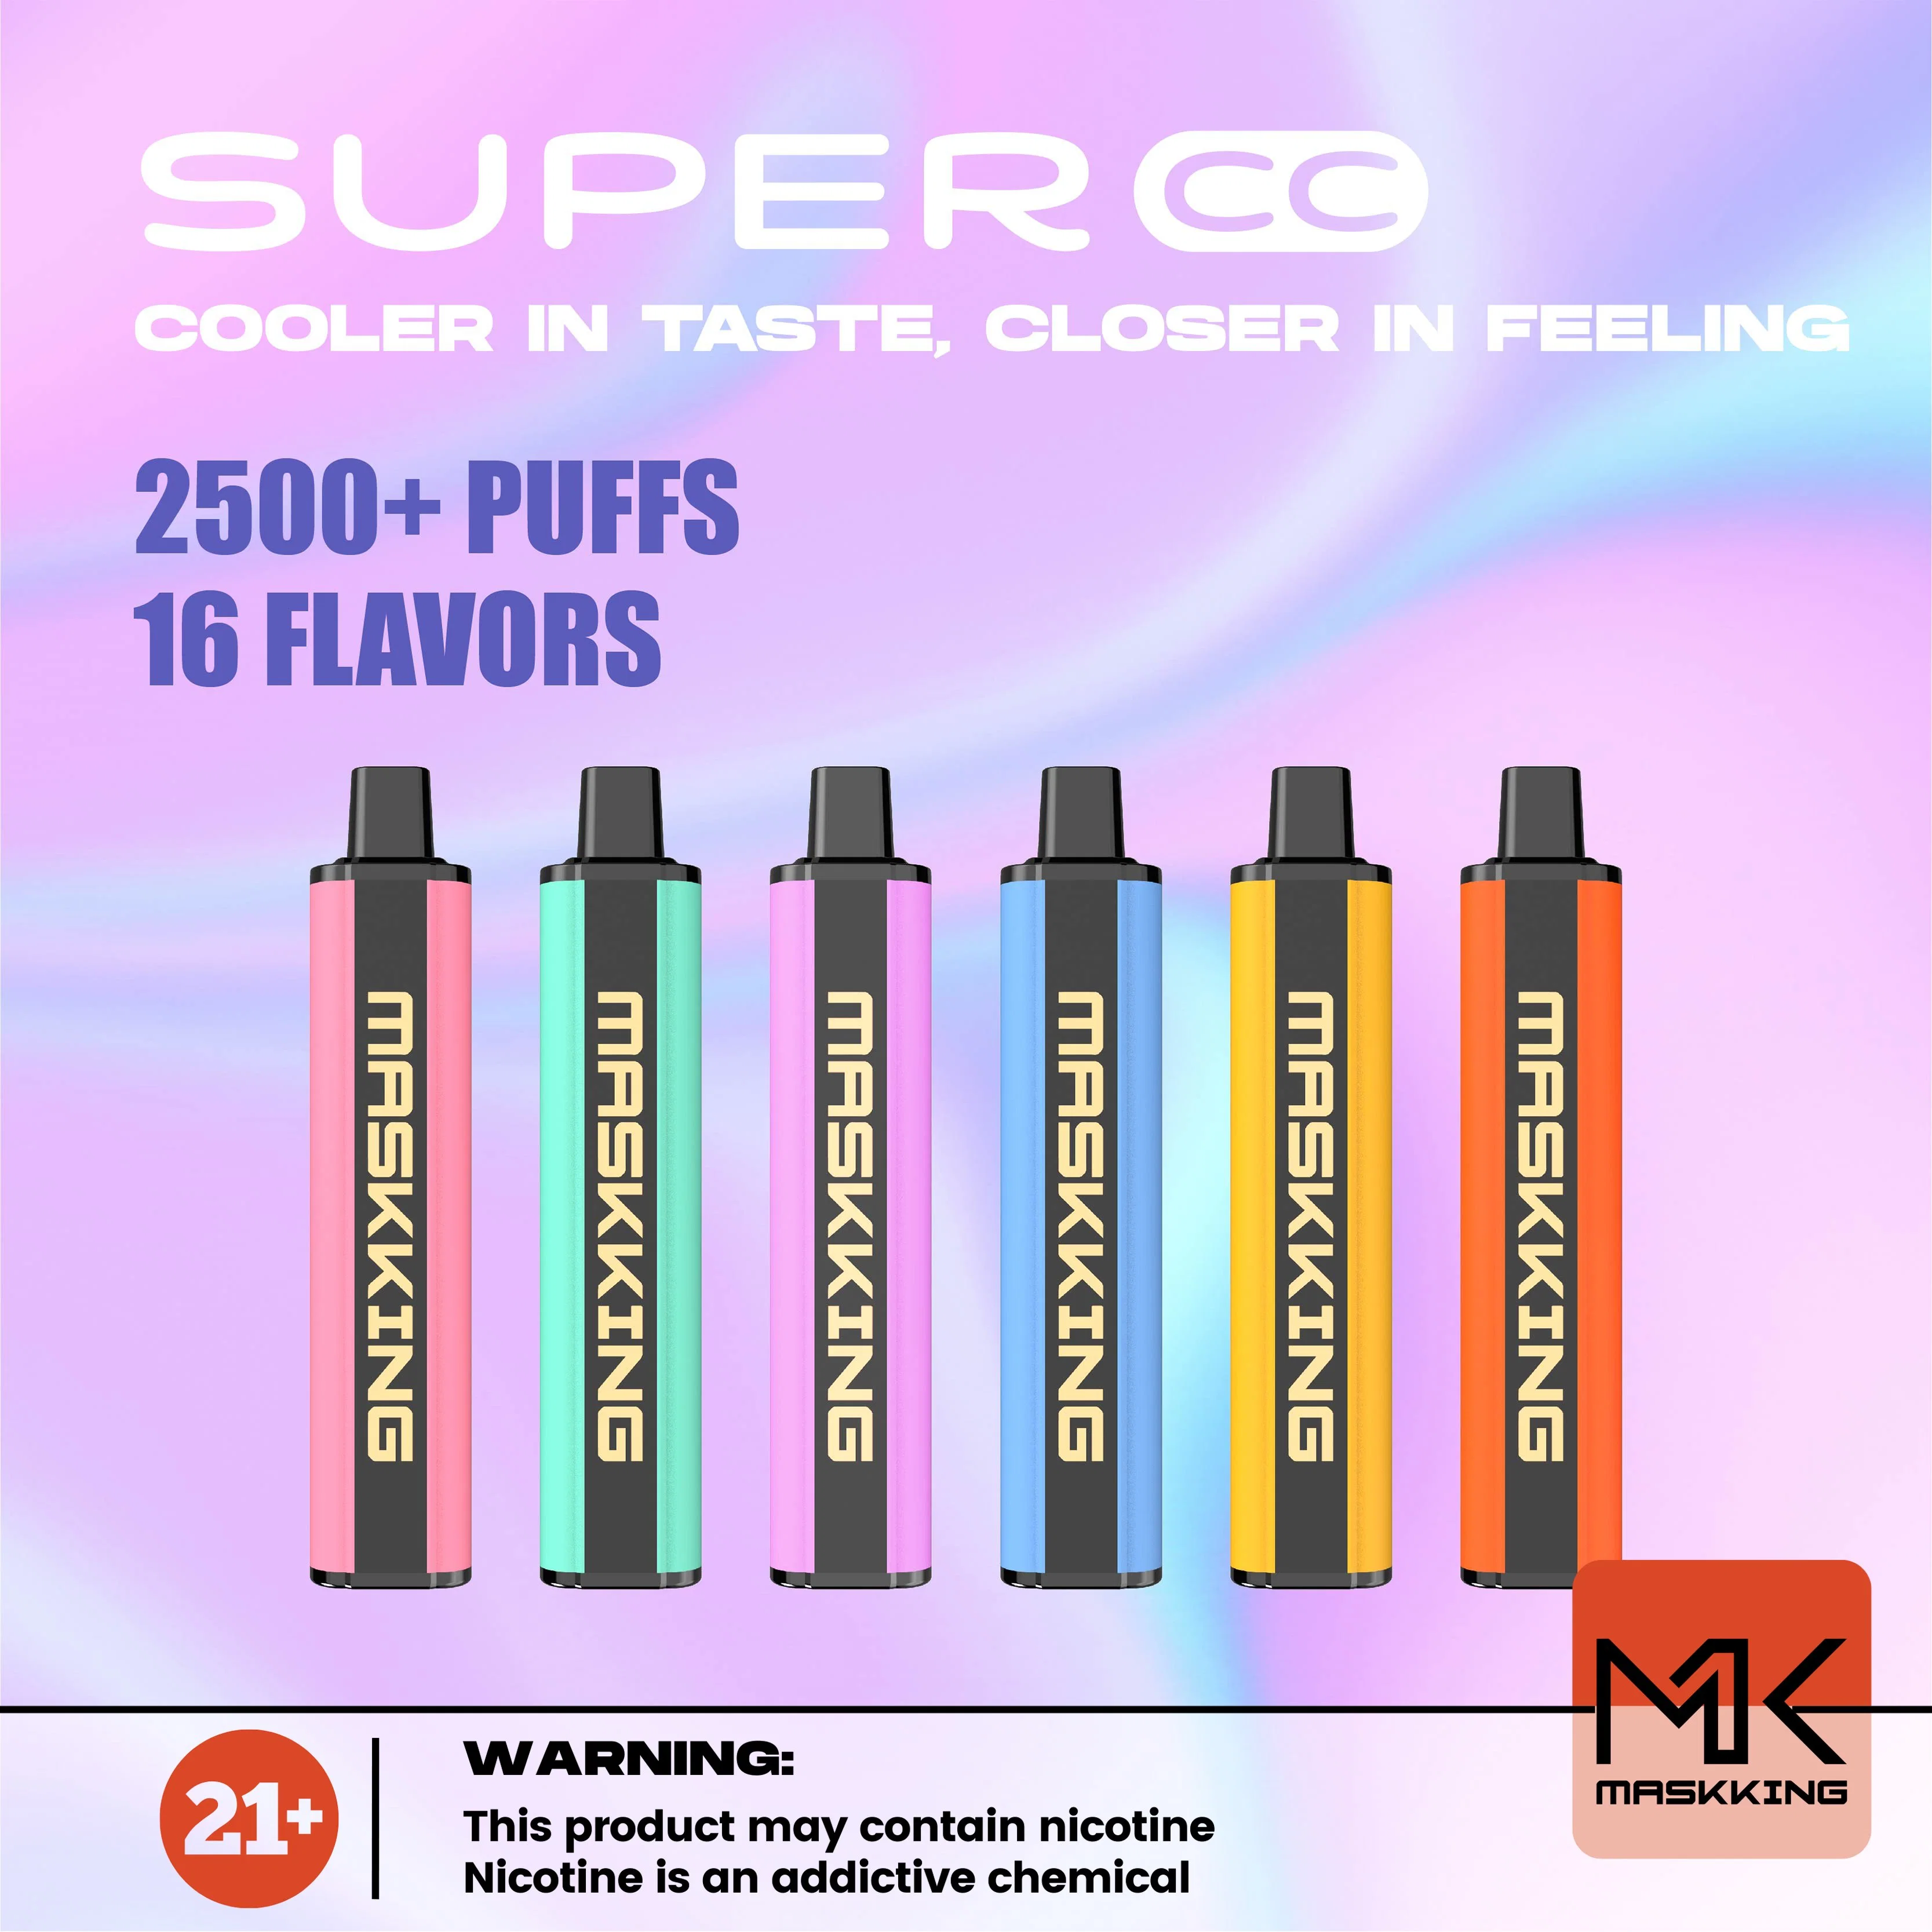 Maskking Disposable/Chargeable Electronic Cigarette Super Cc Terrific Vape Disposable/Chargeable Shisha Flavour Hookah